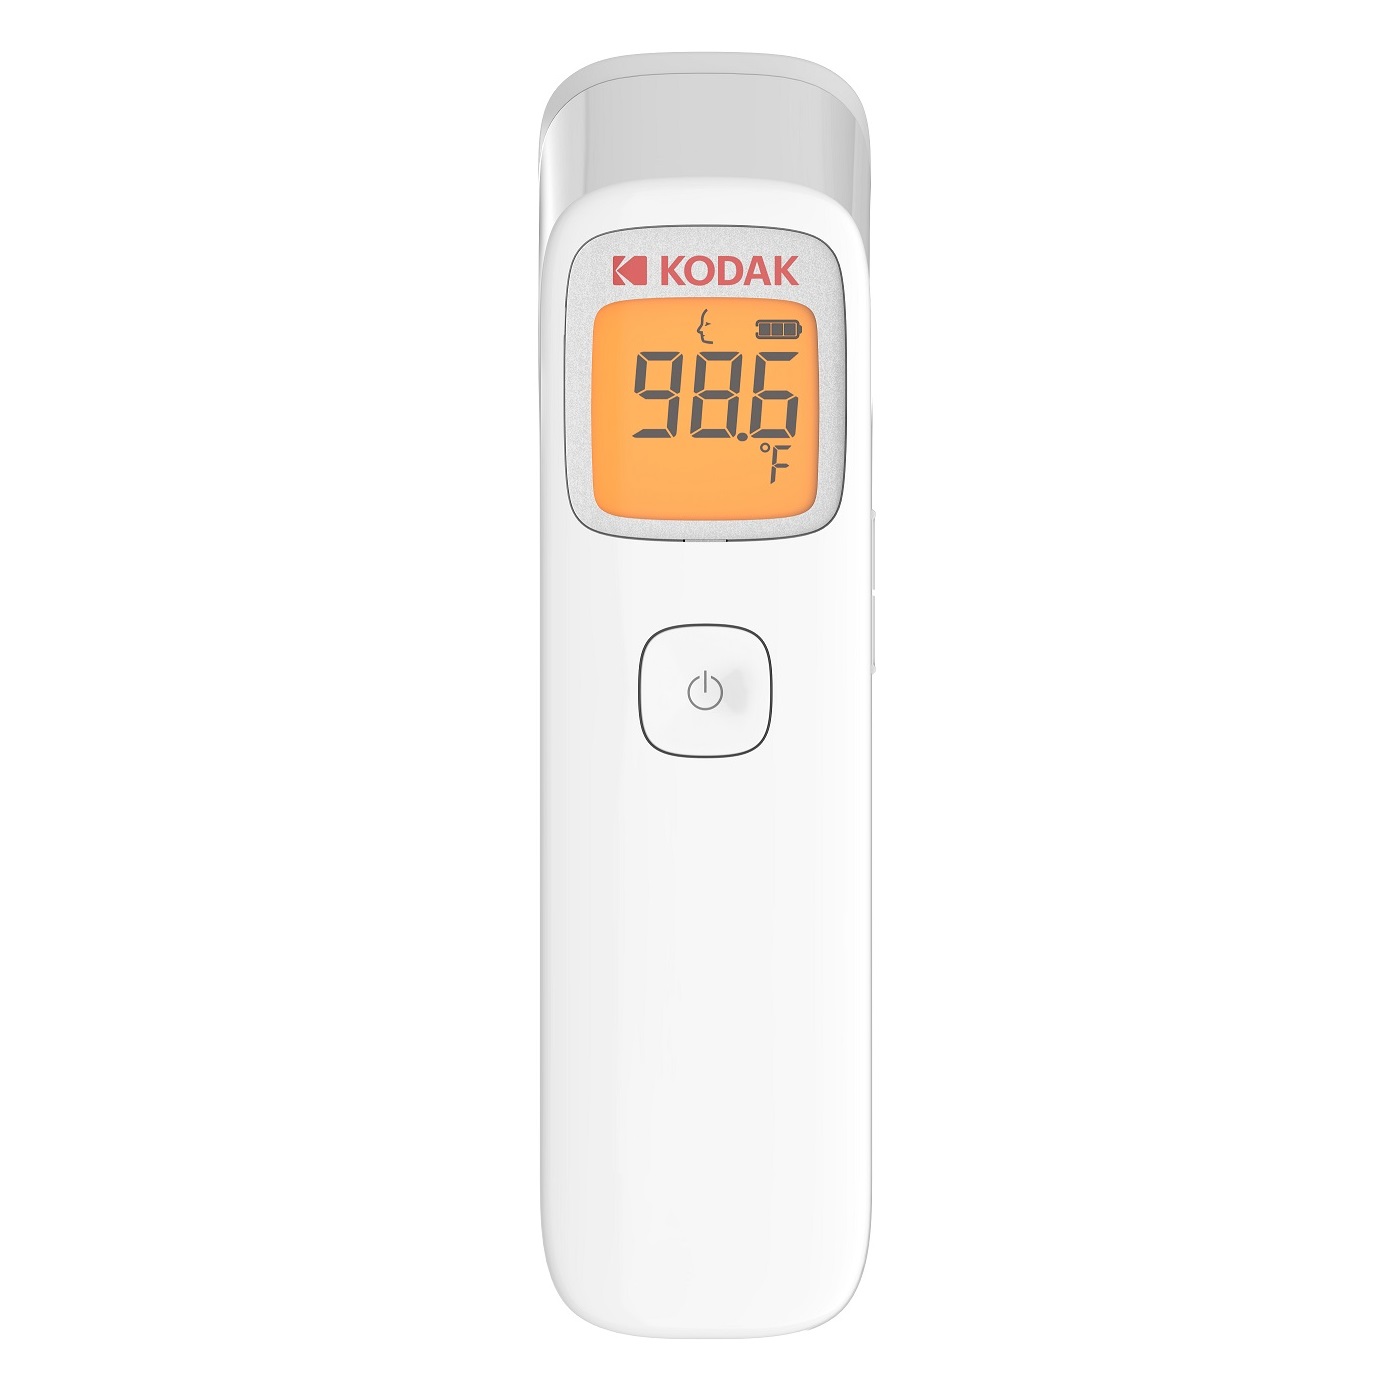 KODAK Infrared Thermometer: Non-Contact Infrared Thermometer, Fast and Accurate Infrared Forehead T